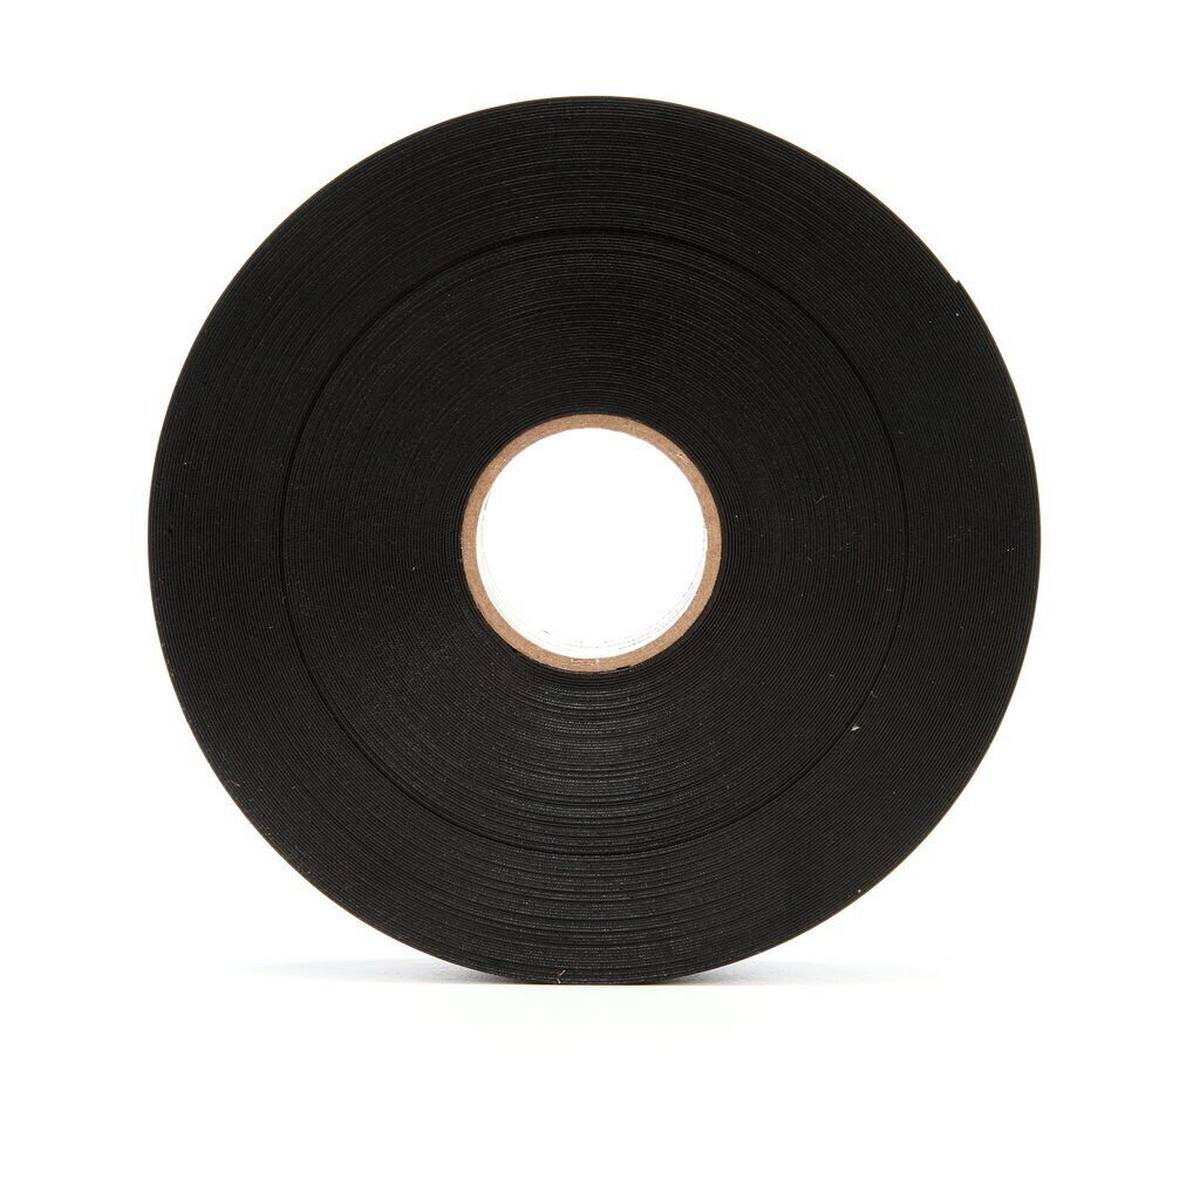 3M Scotchrap 51 corrosion protection tape, black, 25 mm x 30 m, 0.5 mm